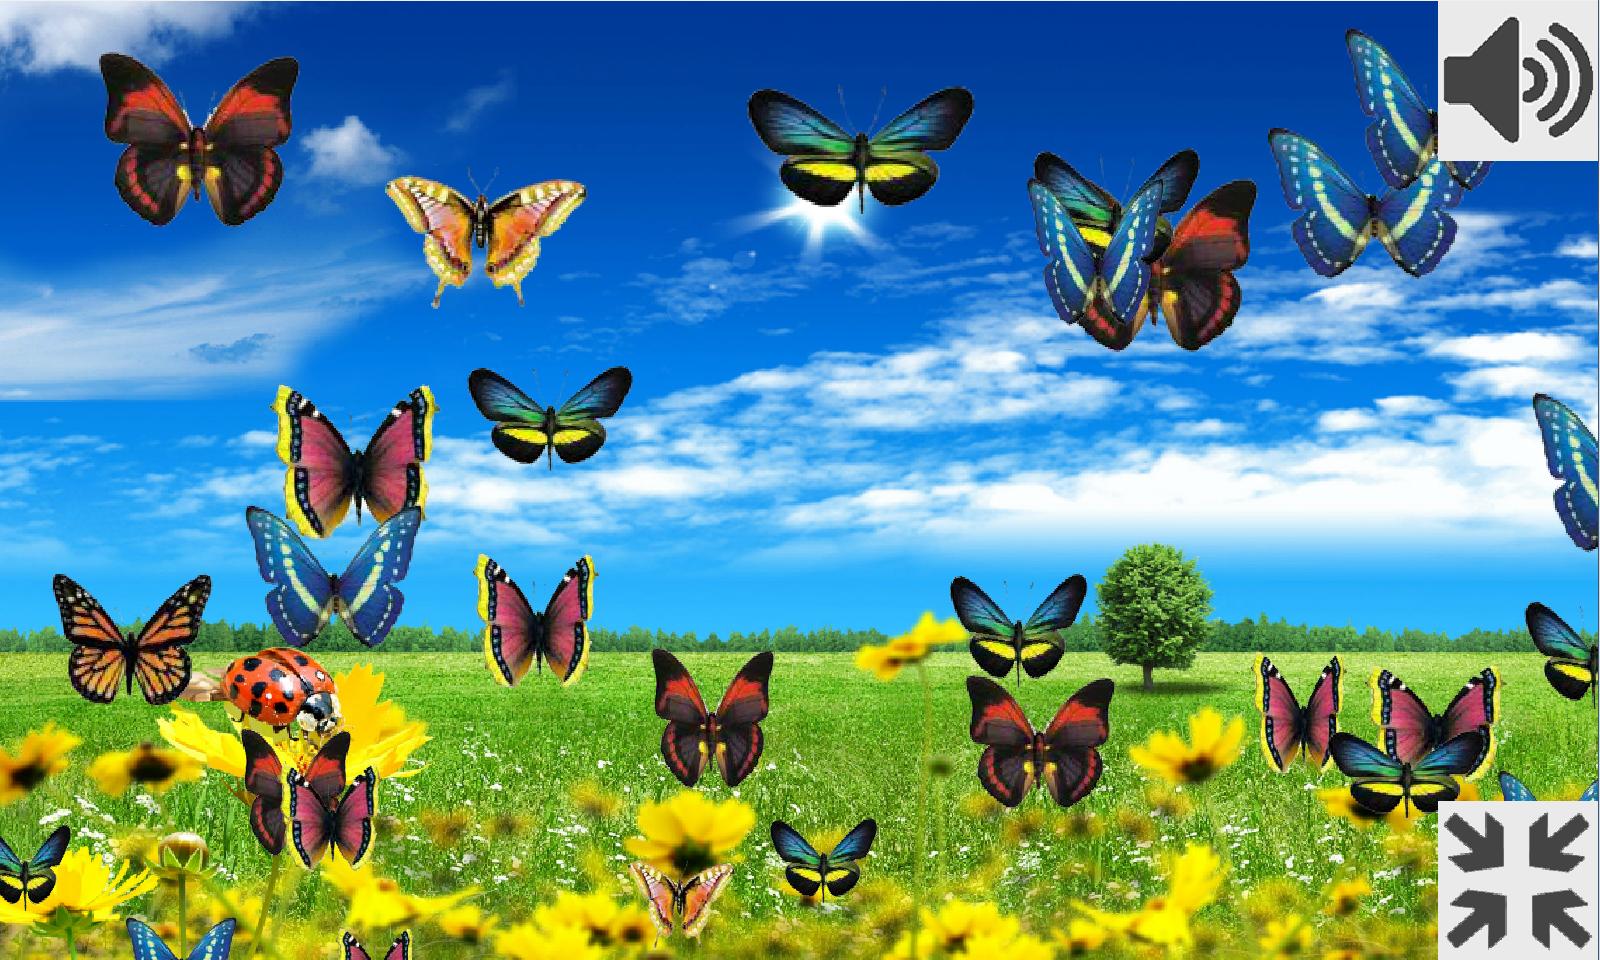 Про лета бабочка. Игра бабочки летают. Игра цветы и бабочки. Июнь бабочки летают. Игра Баттерфляй бабочки.